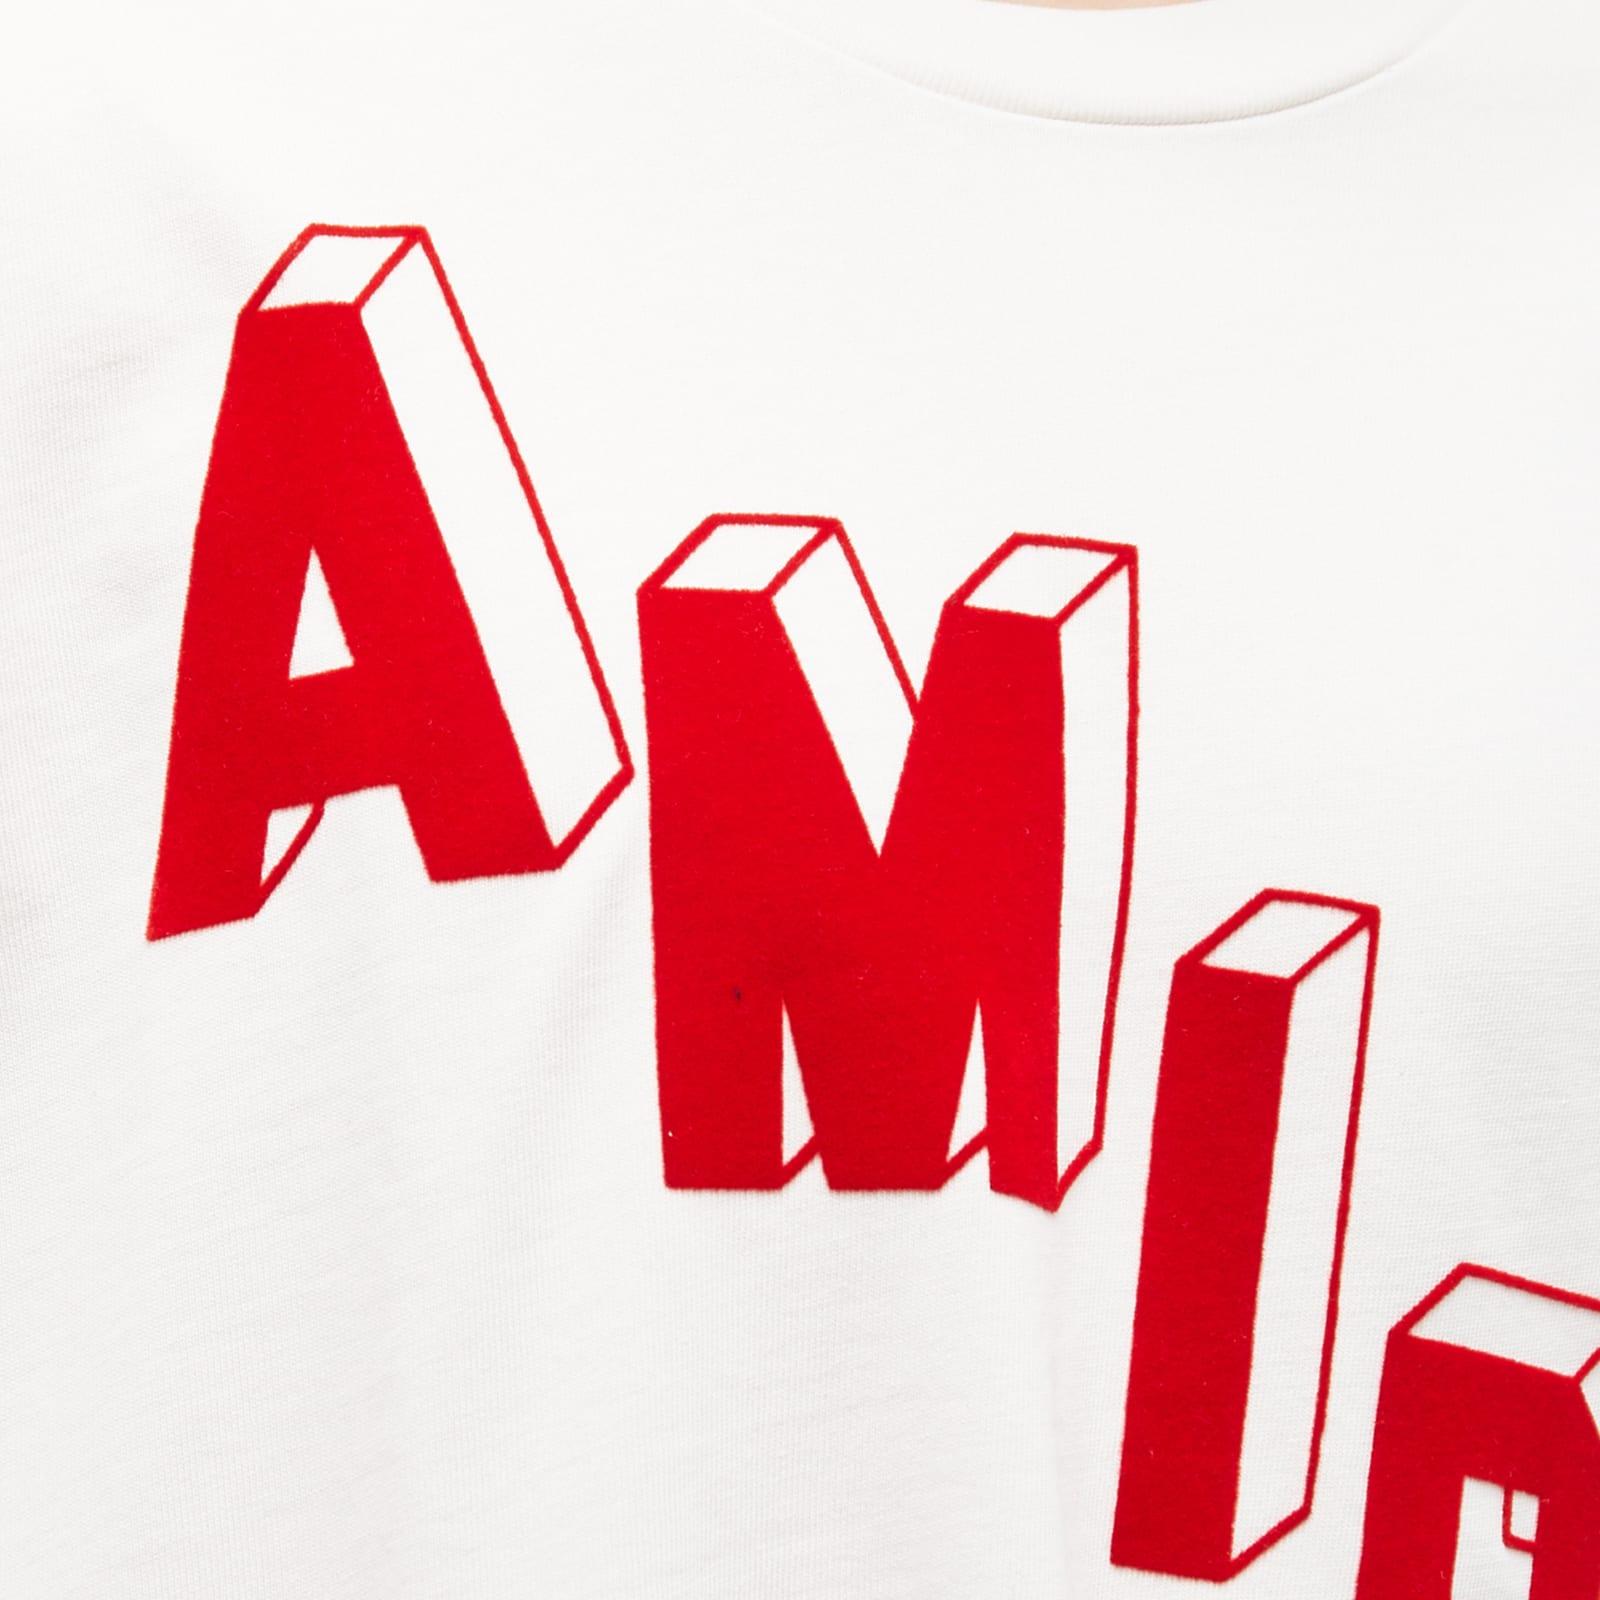 Amiri Men's Flocked Hockey Skater T-Shirt